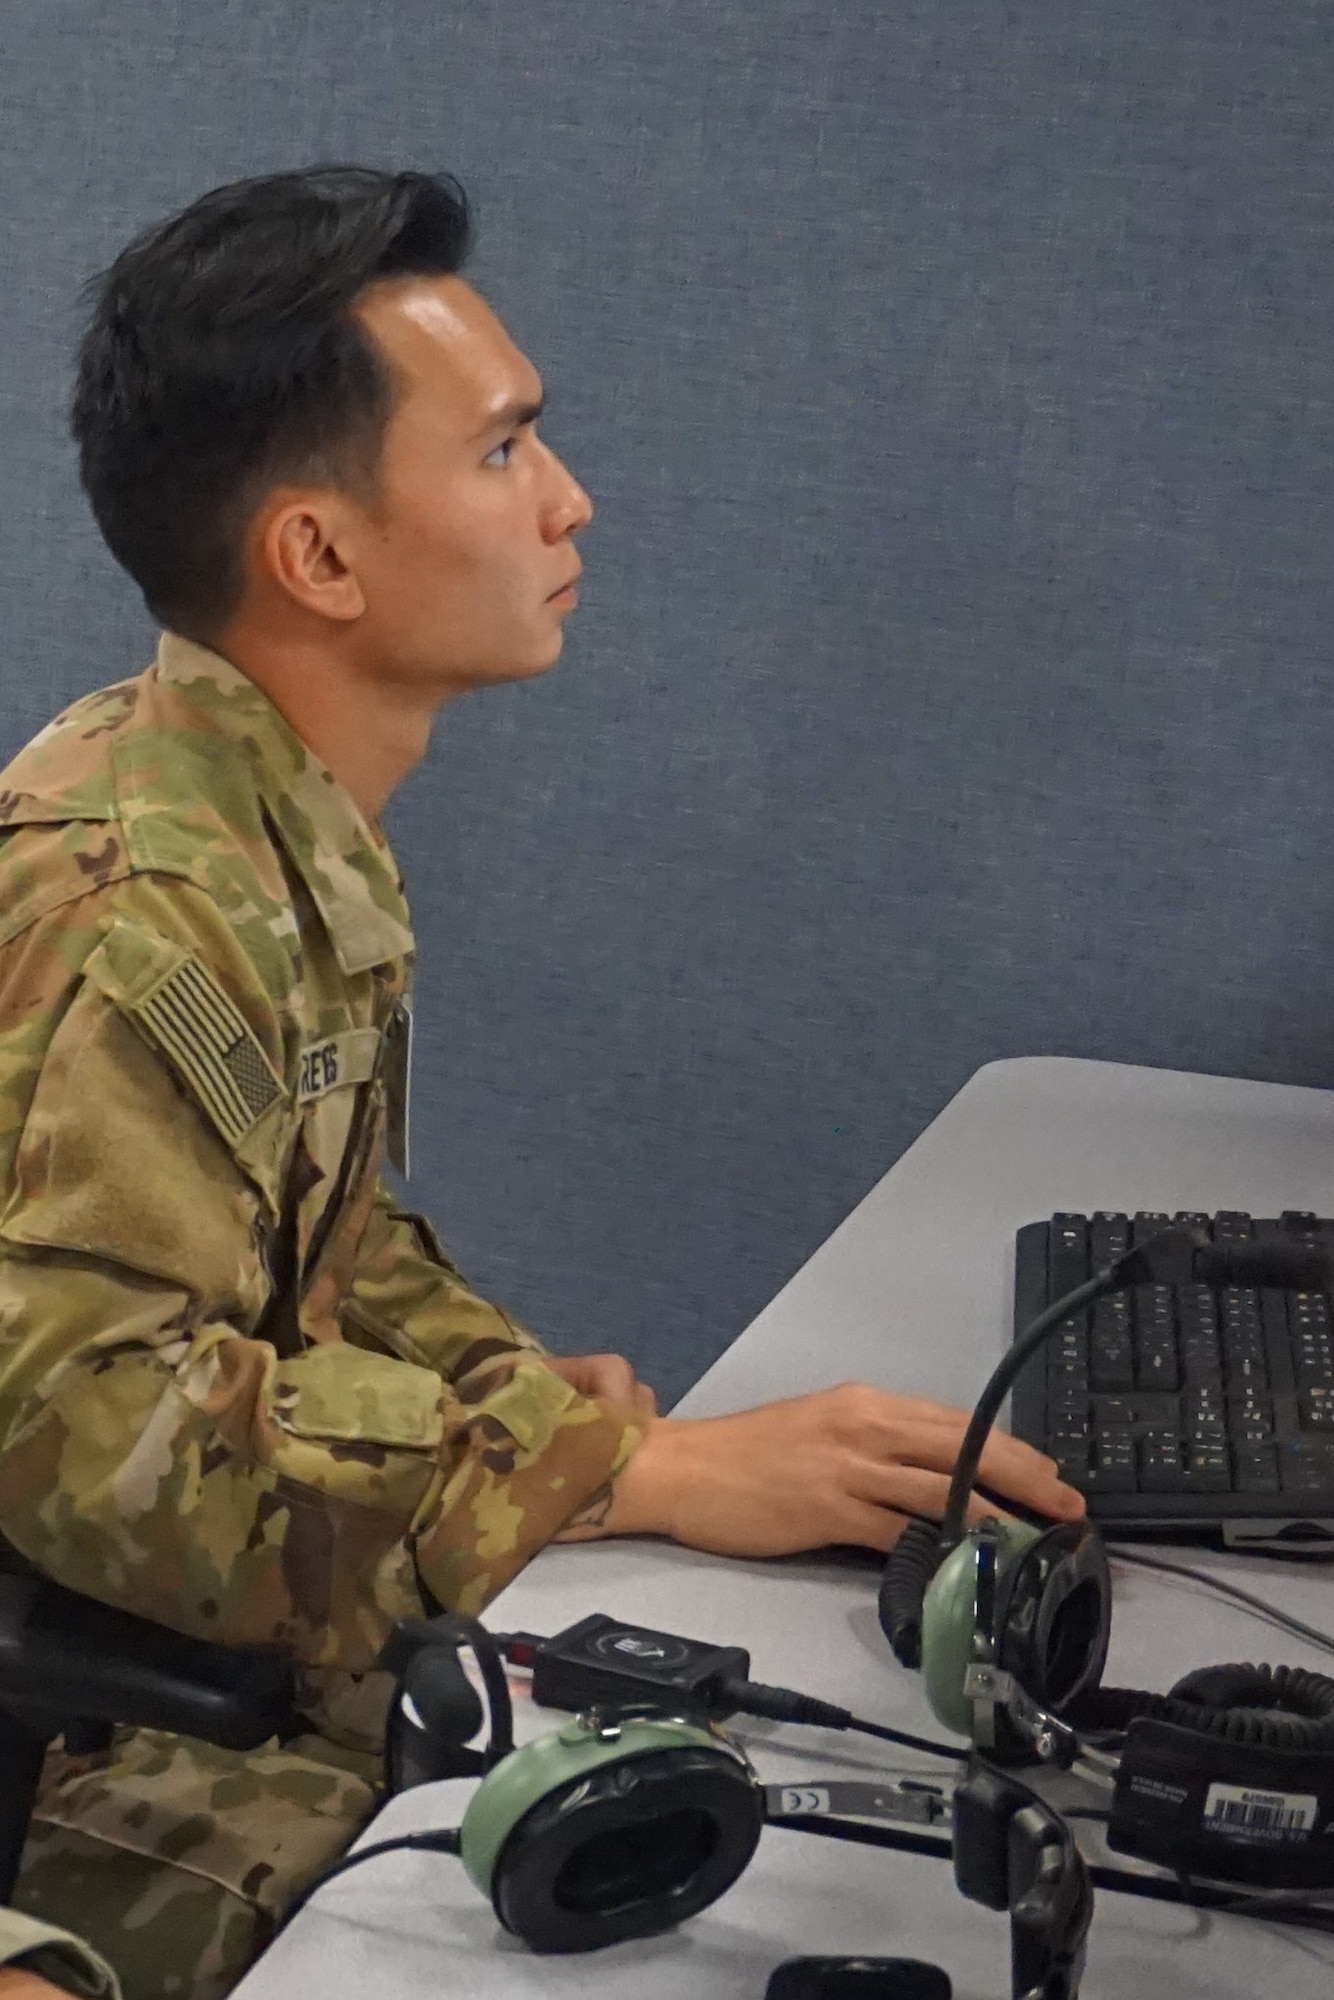 military member working at computer